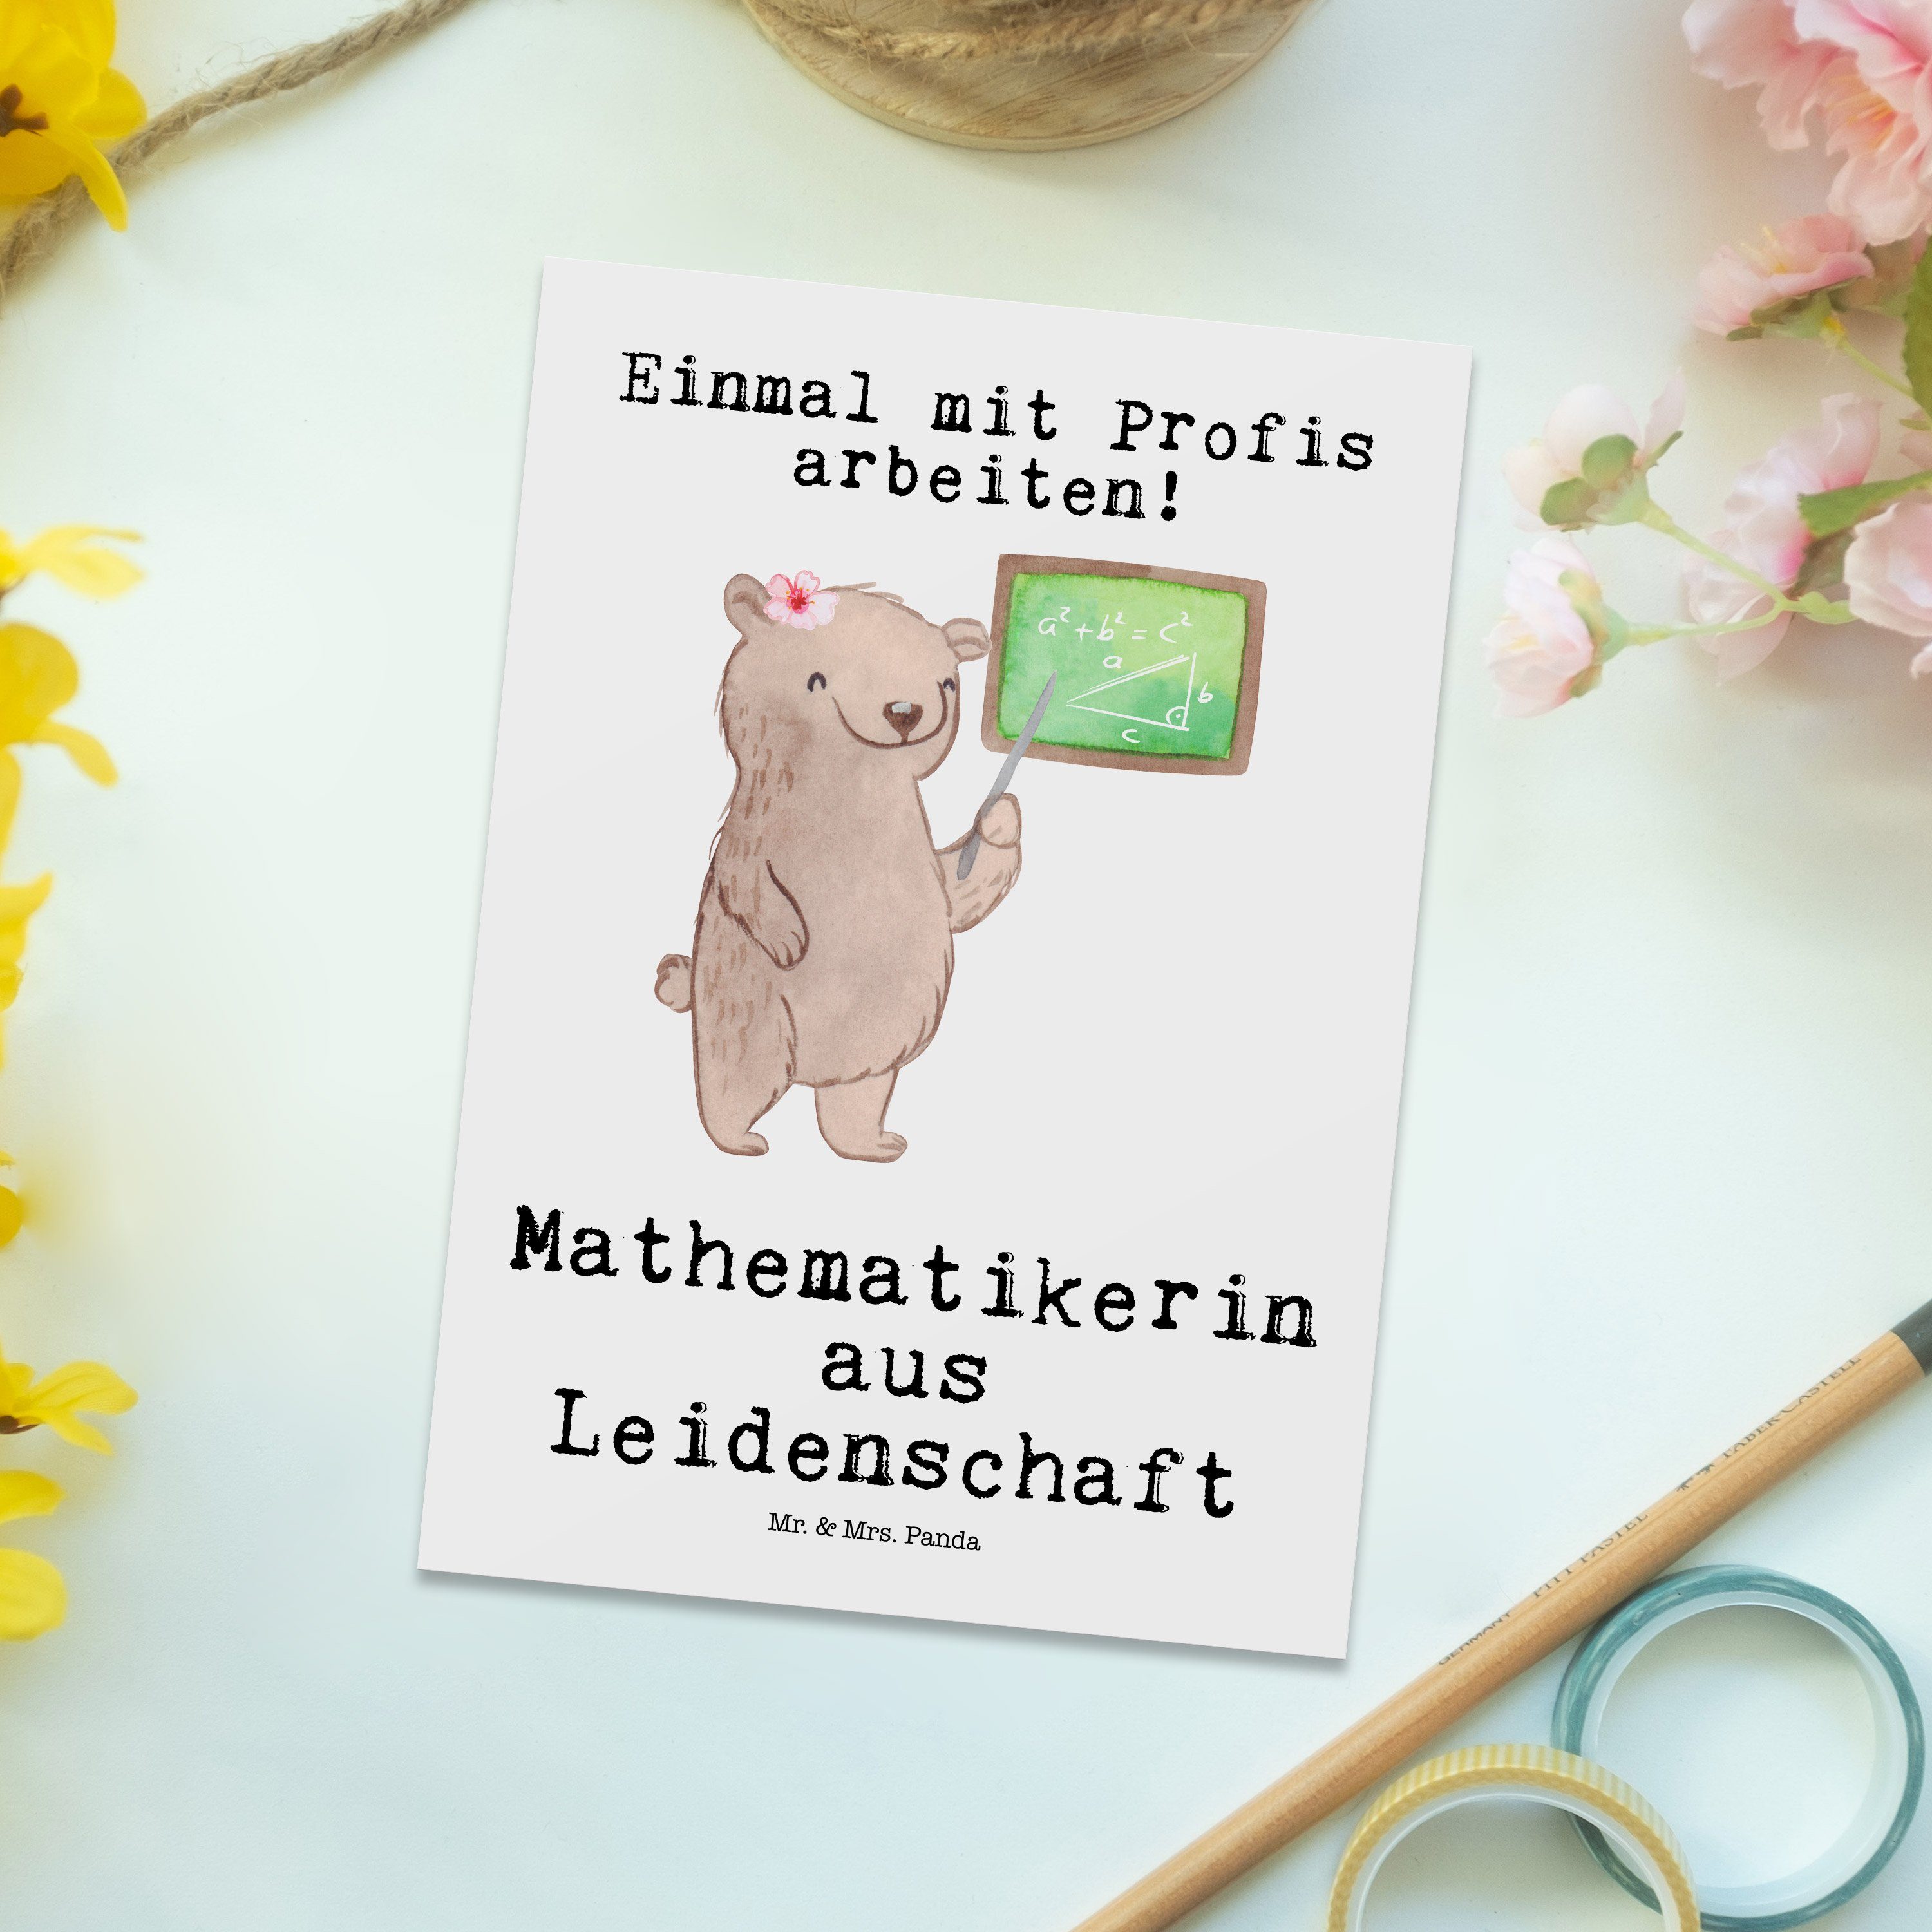 Mrs. aus Geschenk, Kollegin, Mathematikerin Panda Karte, Mr. A - Weiß & - Leidenschaft Postkarte